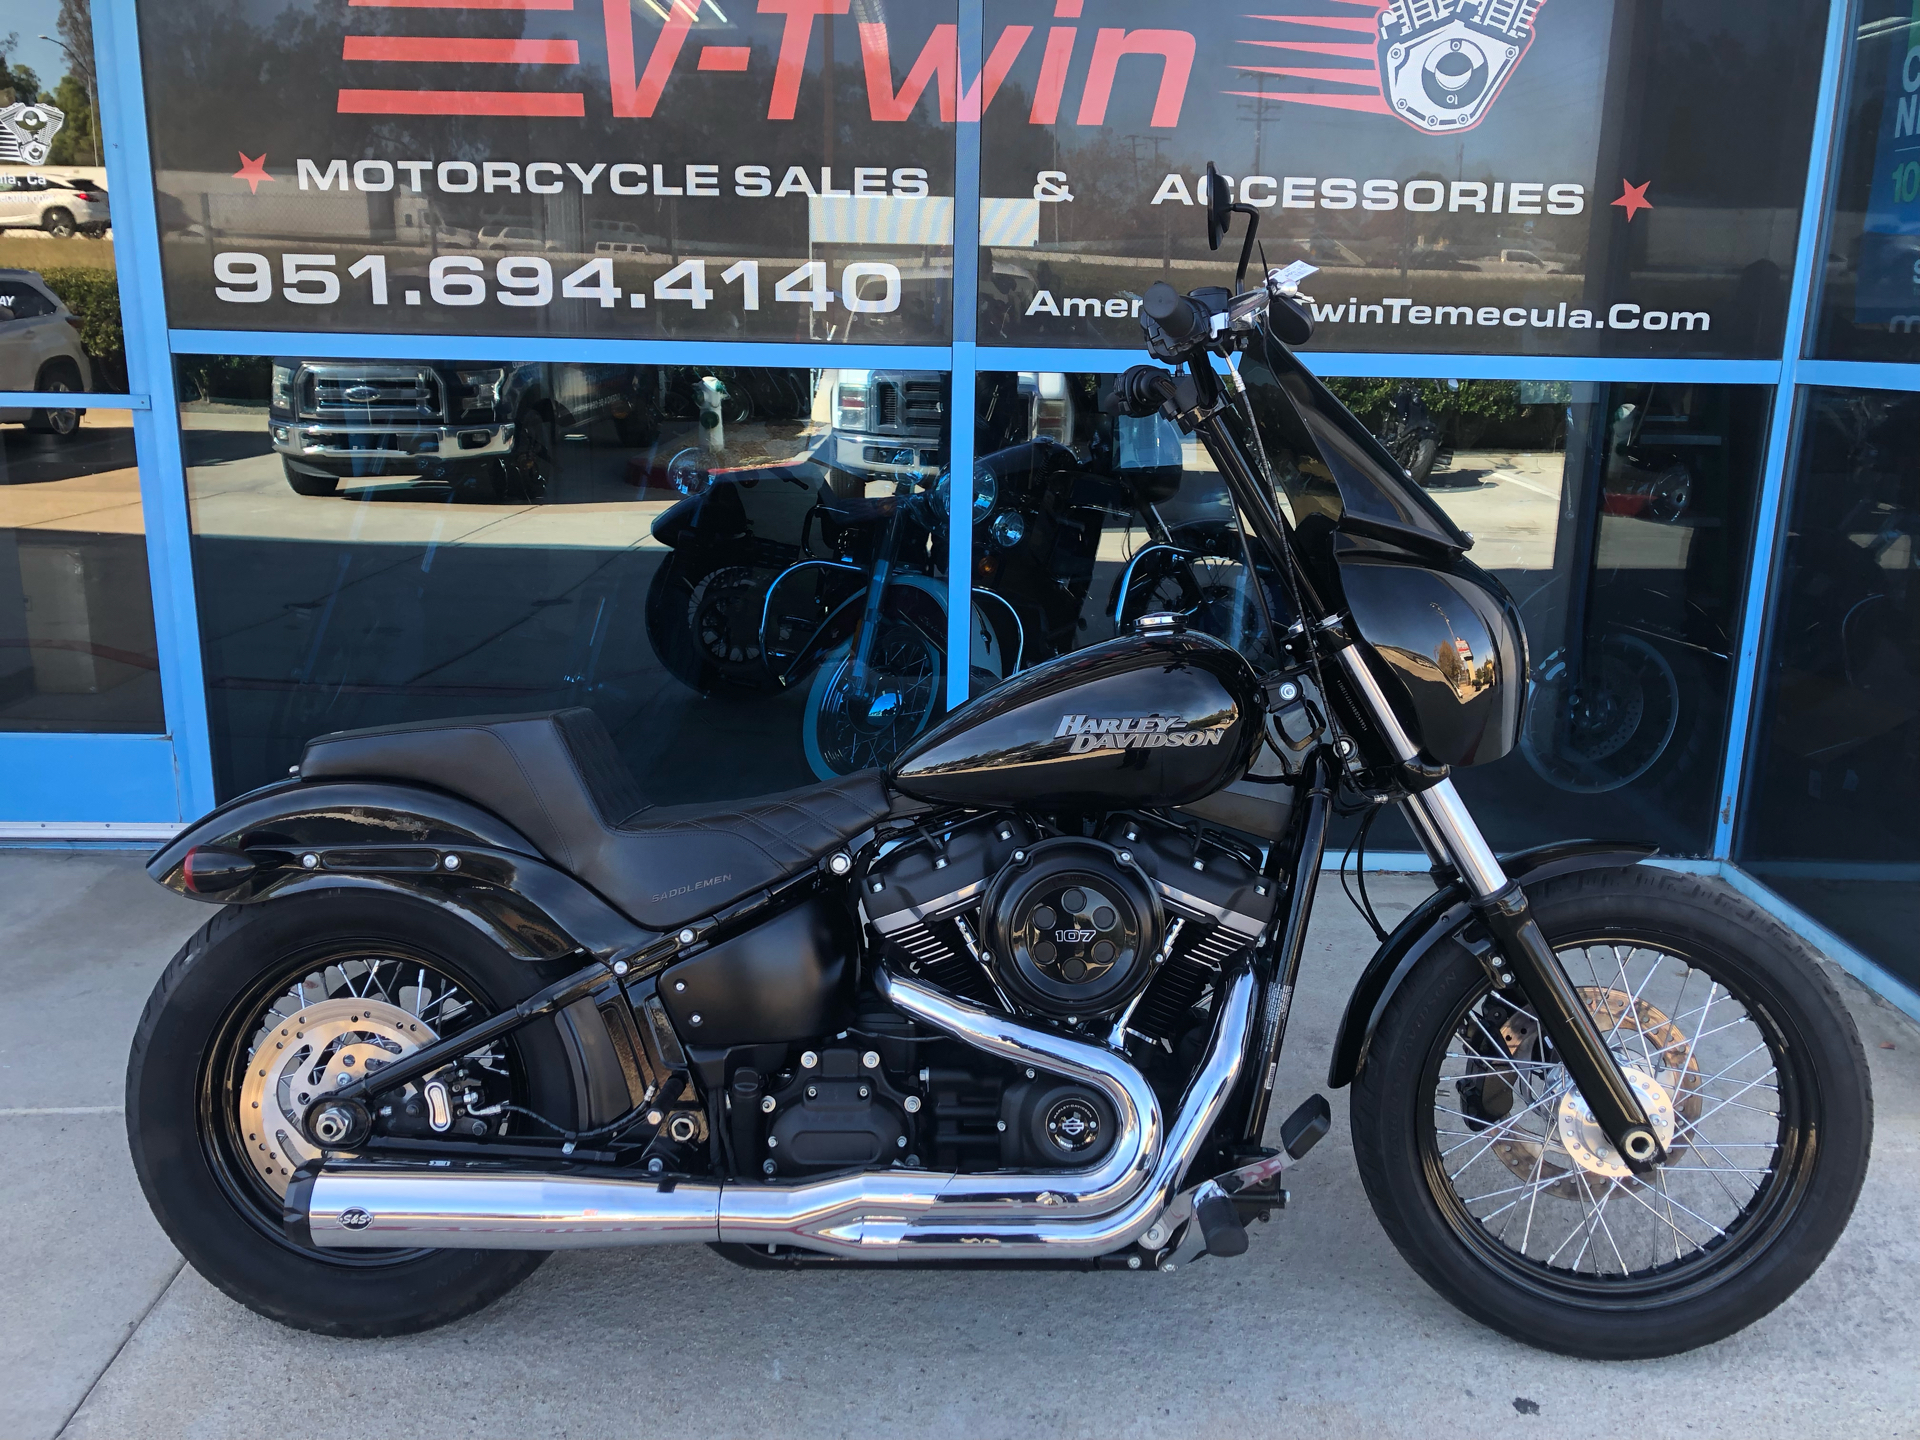 2019 Harley-Davidson Street Bob® in Temecula, California - Photo 1